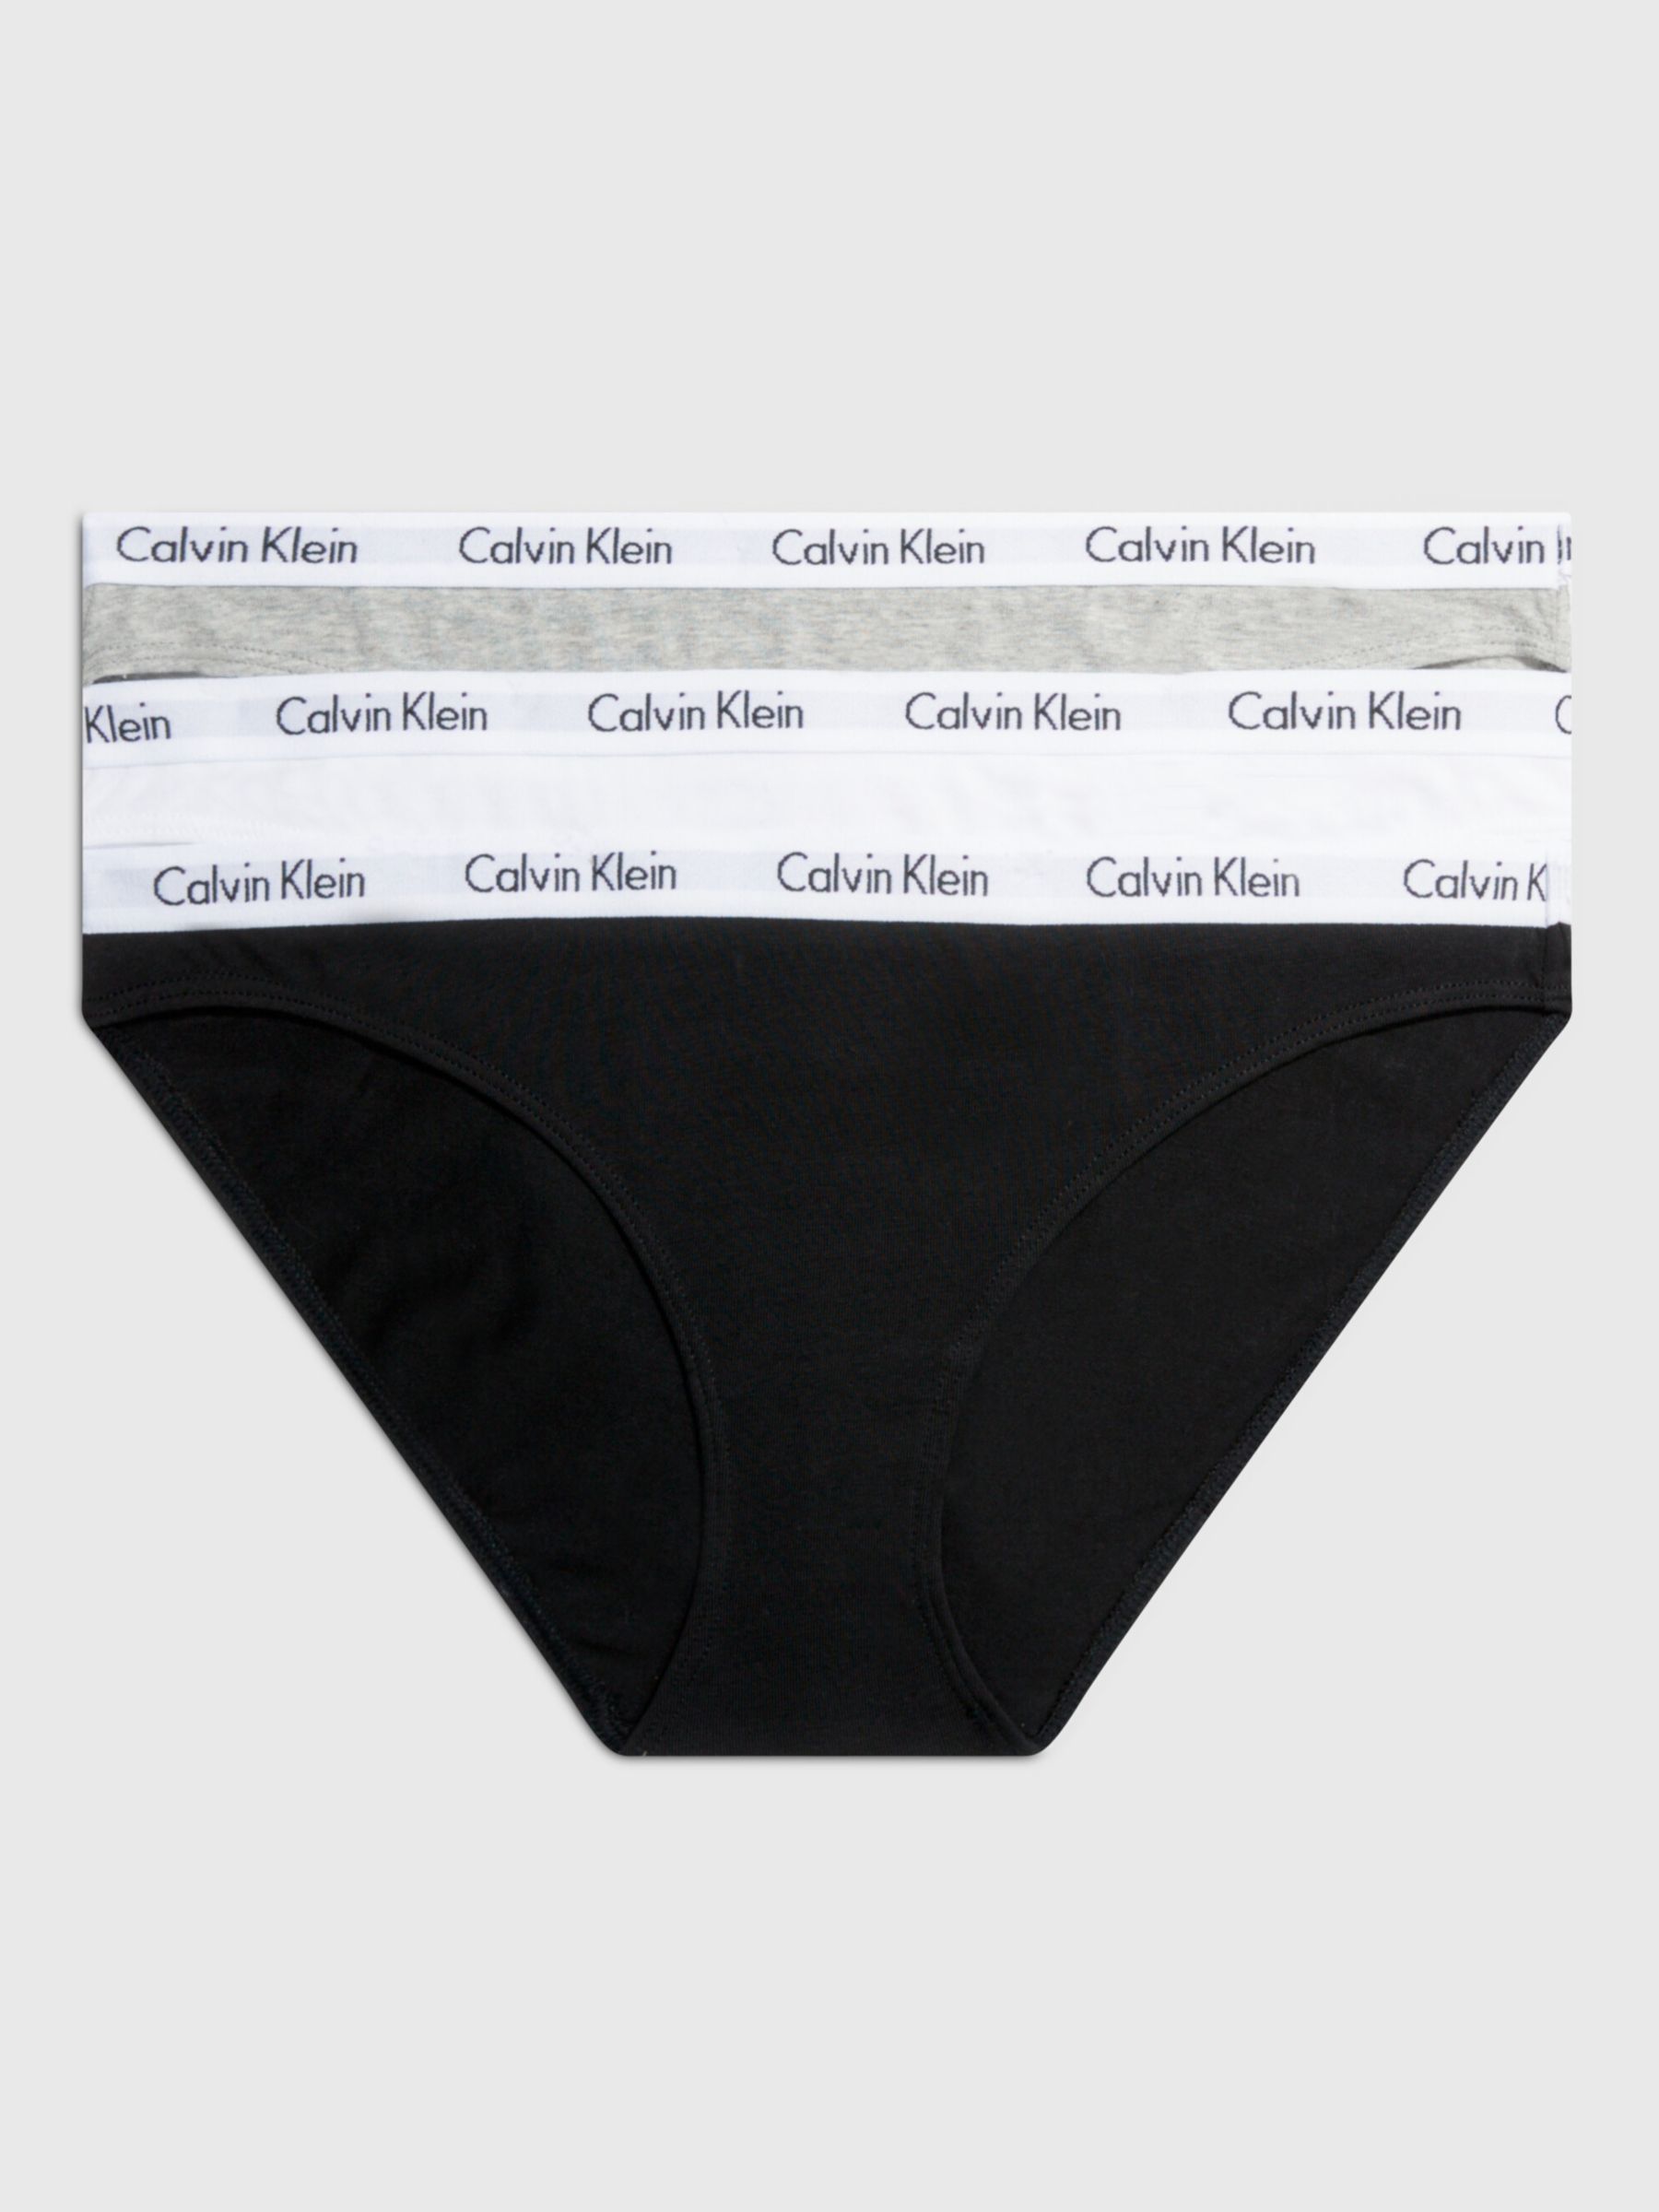 Calvin Klein Carousel Bikini Knickers, Pack of 3, Black/White/Grey at John  Lewis & Partners